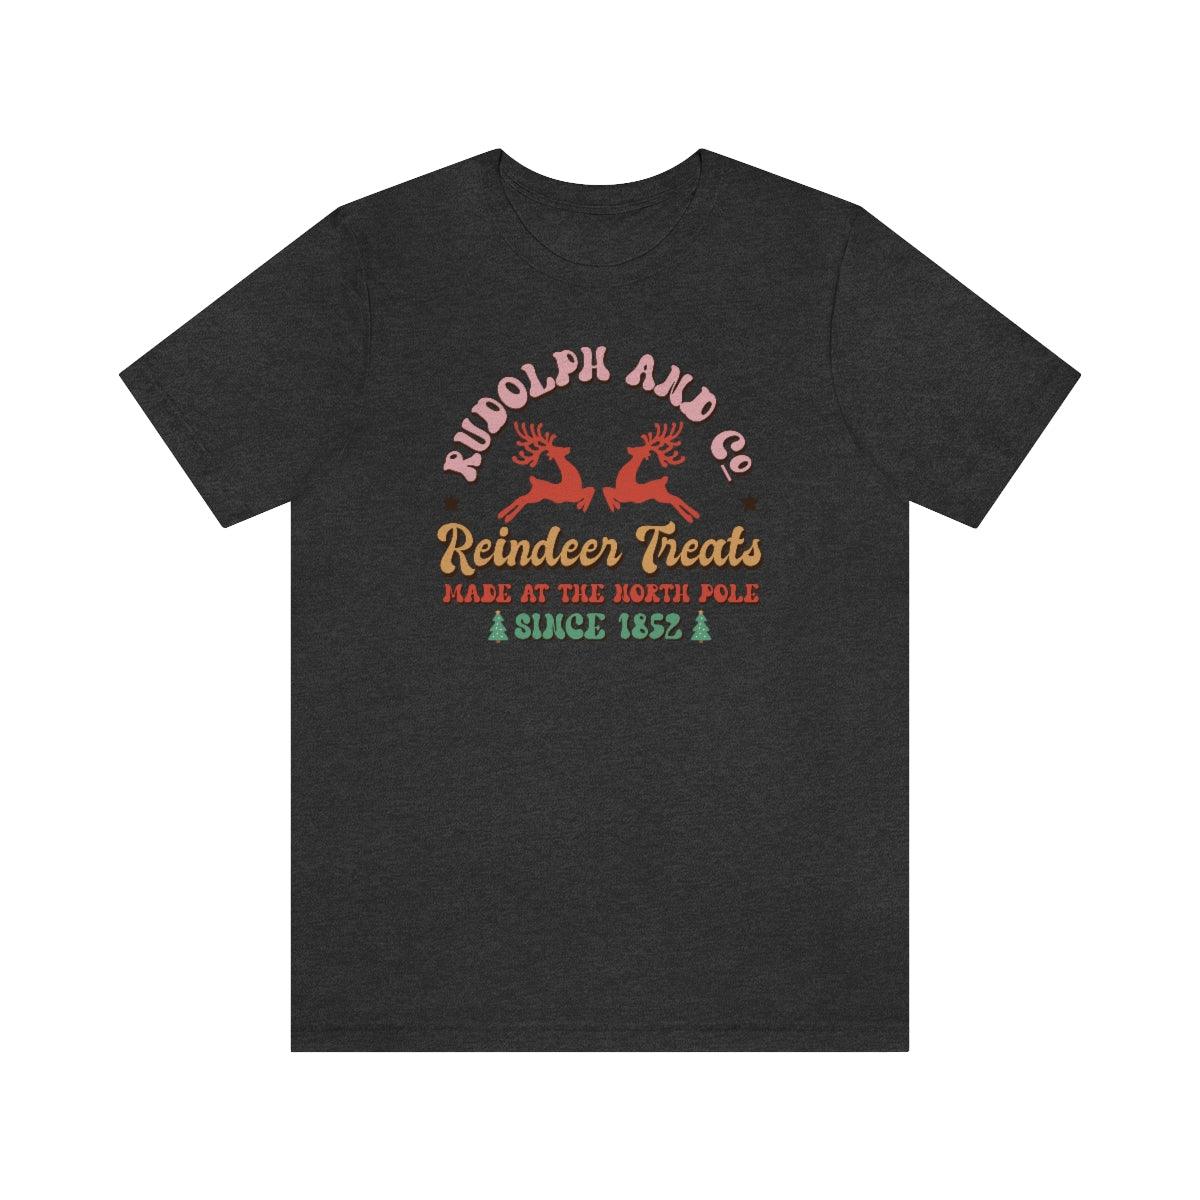 Rudolph and Co Christmas Shirt Short Sleeve Tee - Crystal Rose Design Co.